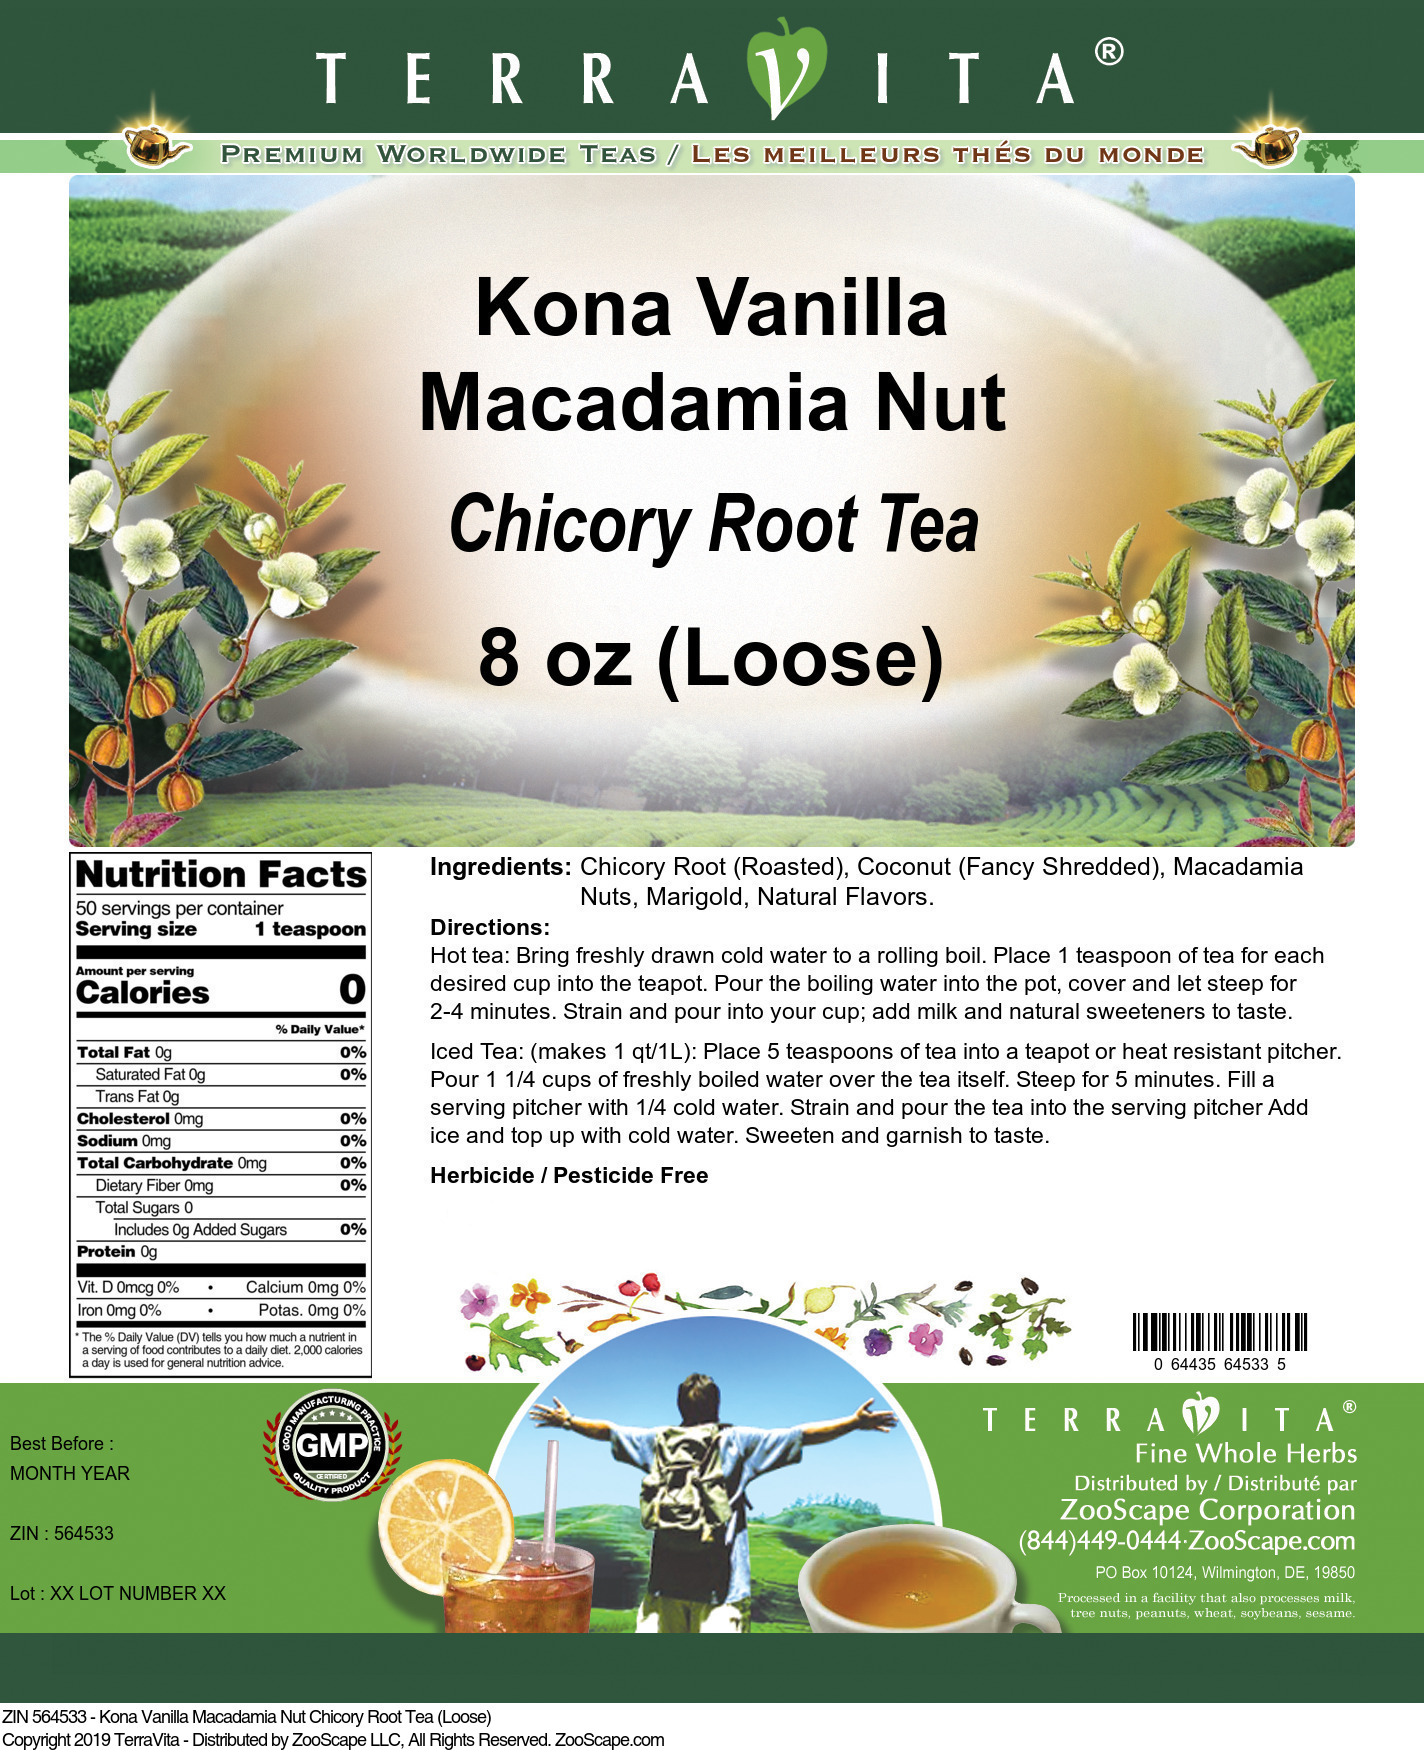 Kona Vanilla Macadamia Nut Chicory Root Tea (Loose) - Label